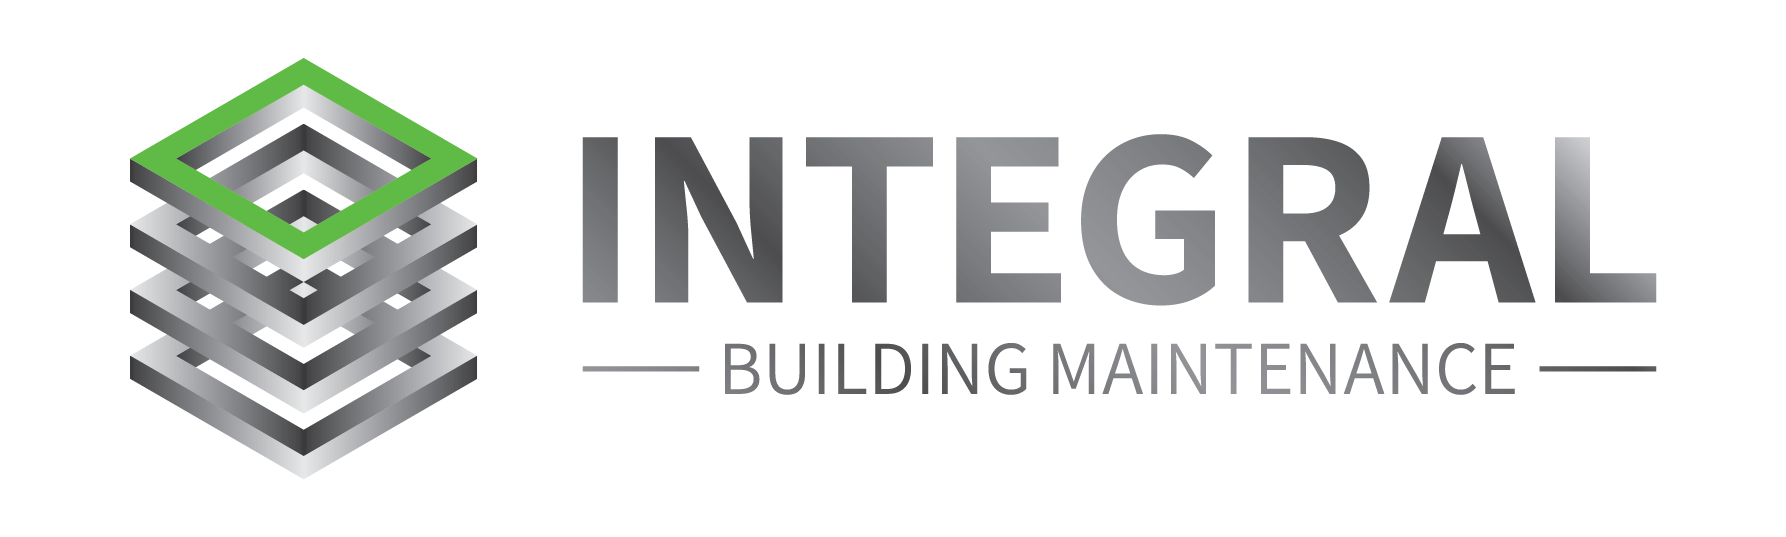 integral building maintenance logo